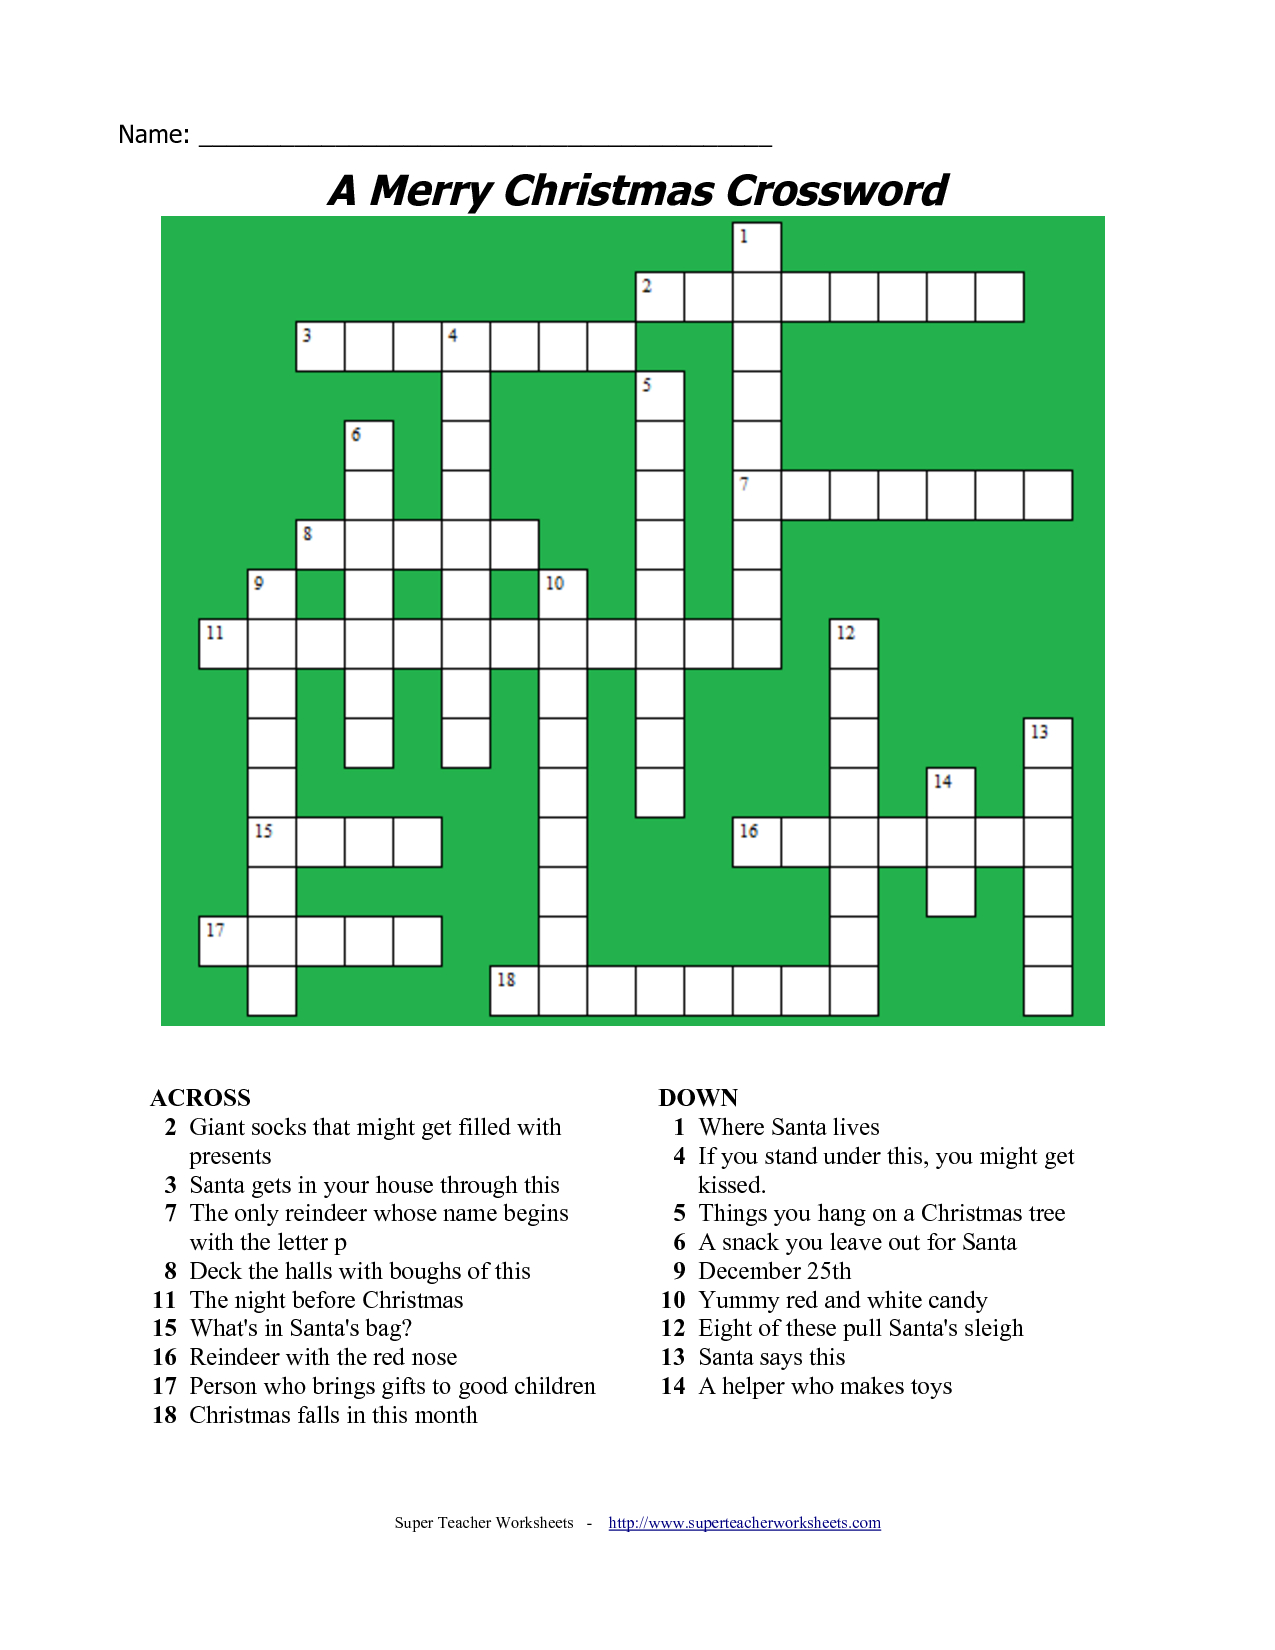 20 Fun Printable Christmas Crossword Puzzles | Kittybabylove - Christmas Crossword Puzzle Printable